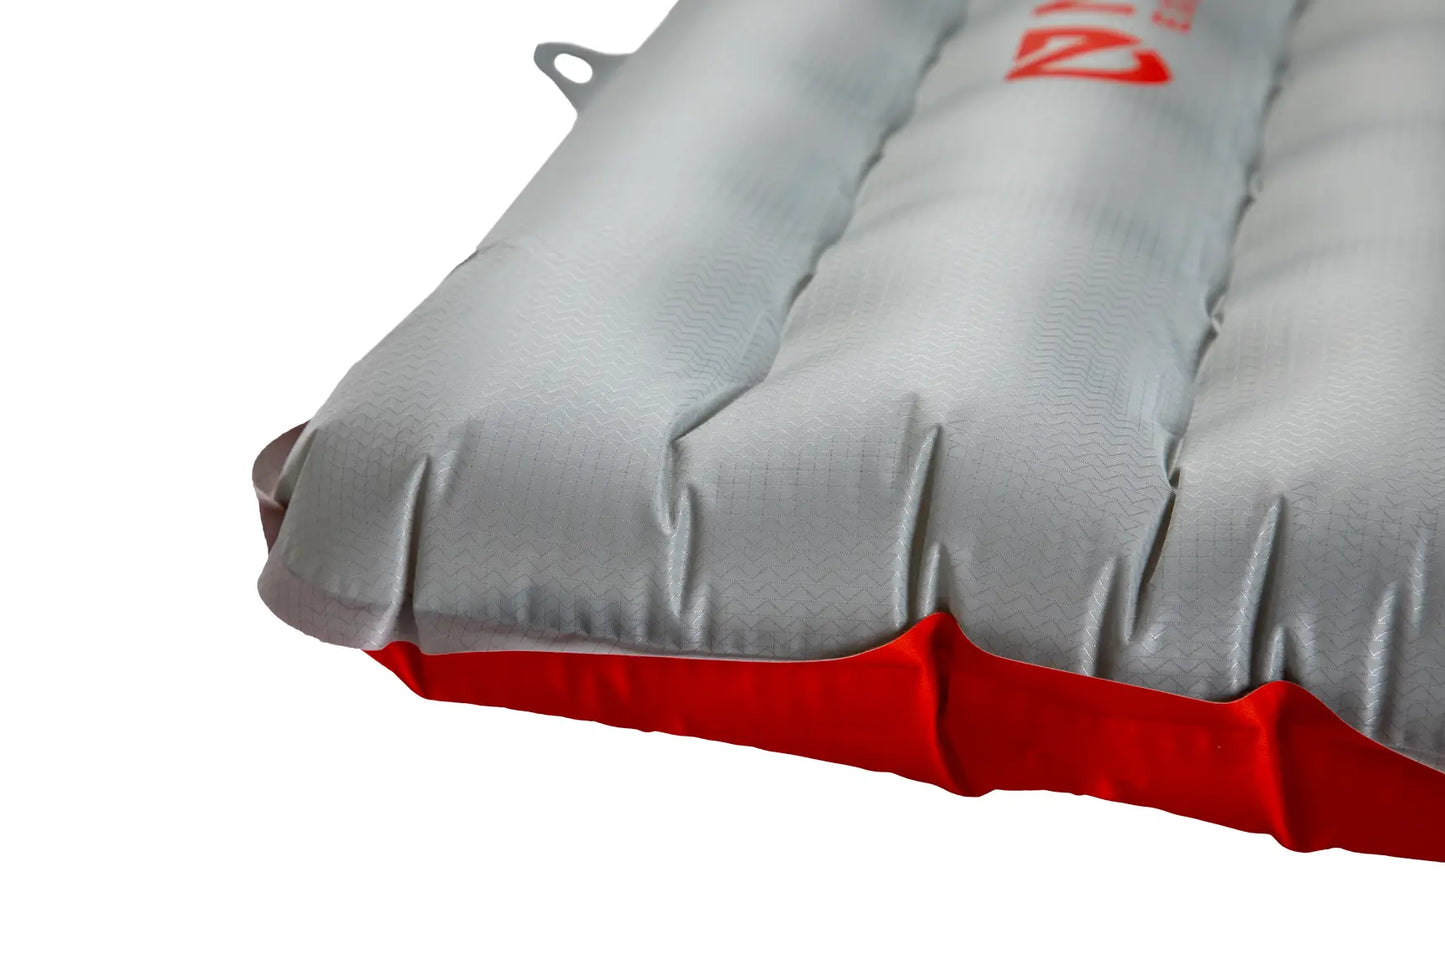 Nemo - Tensor All-Season Ultralight Insulated Sleeping Pad - Regular